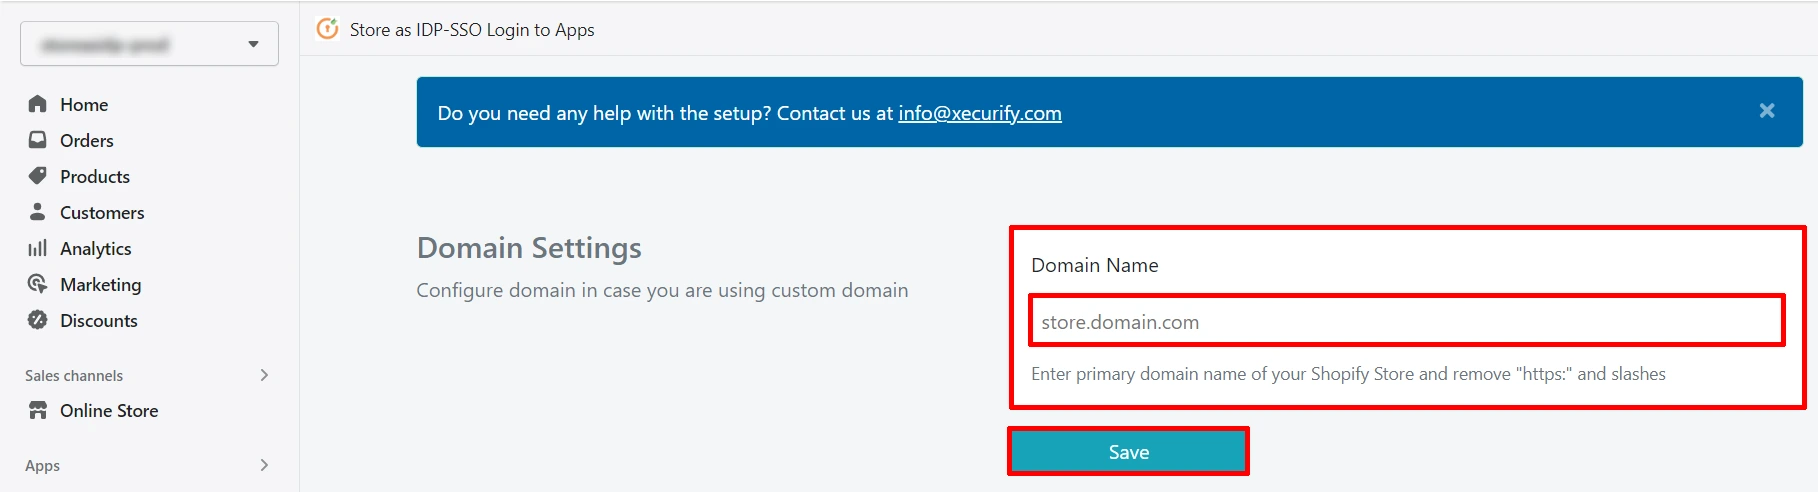 Shopify Uscreen SSO - configure domain